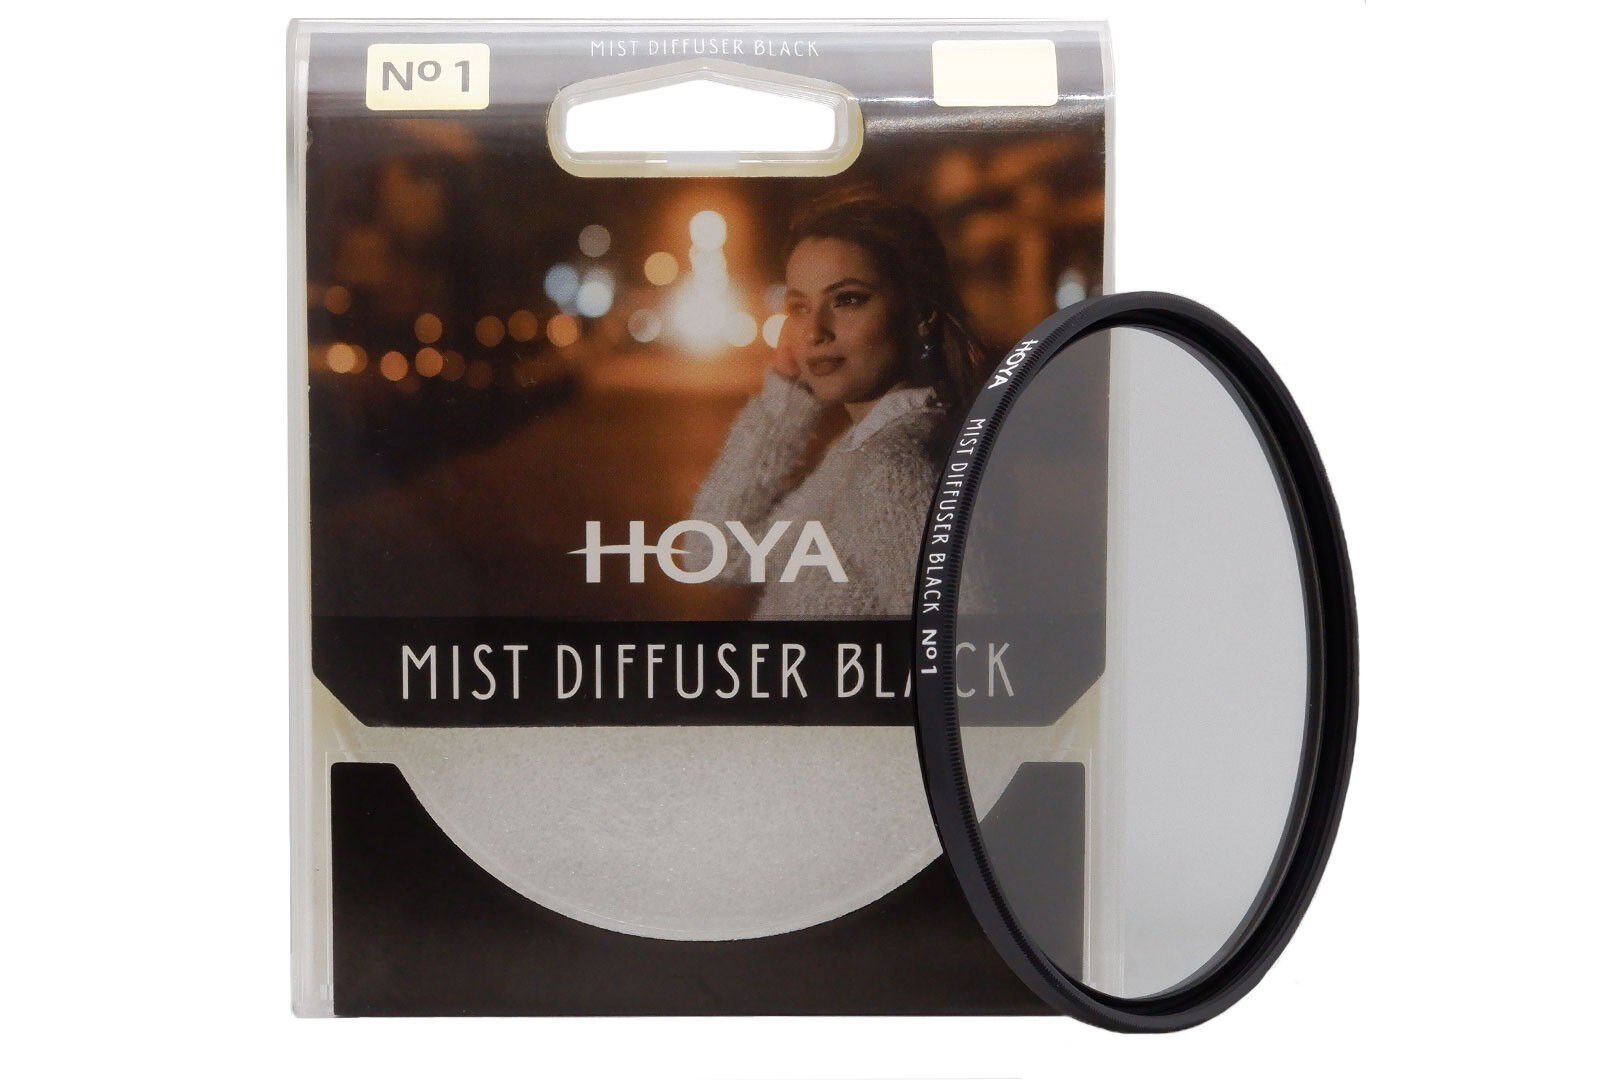 Hoya 72mm Mist Diffuser Filtre Black No1